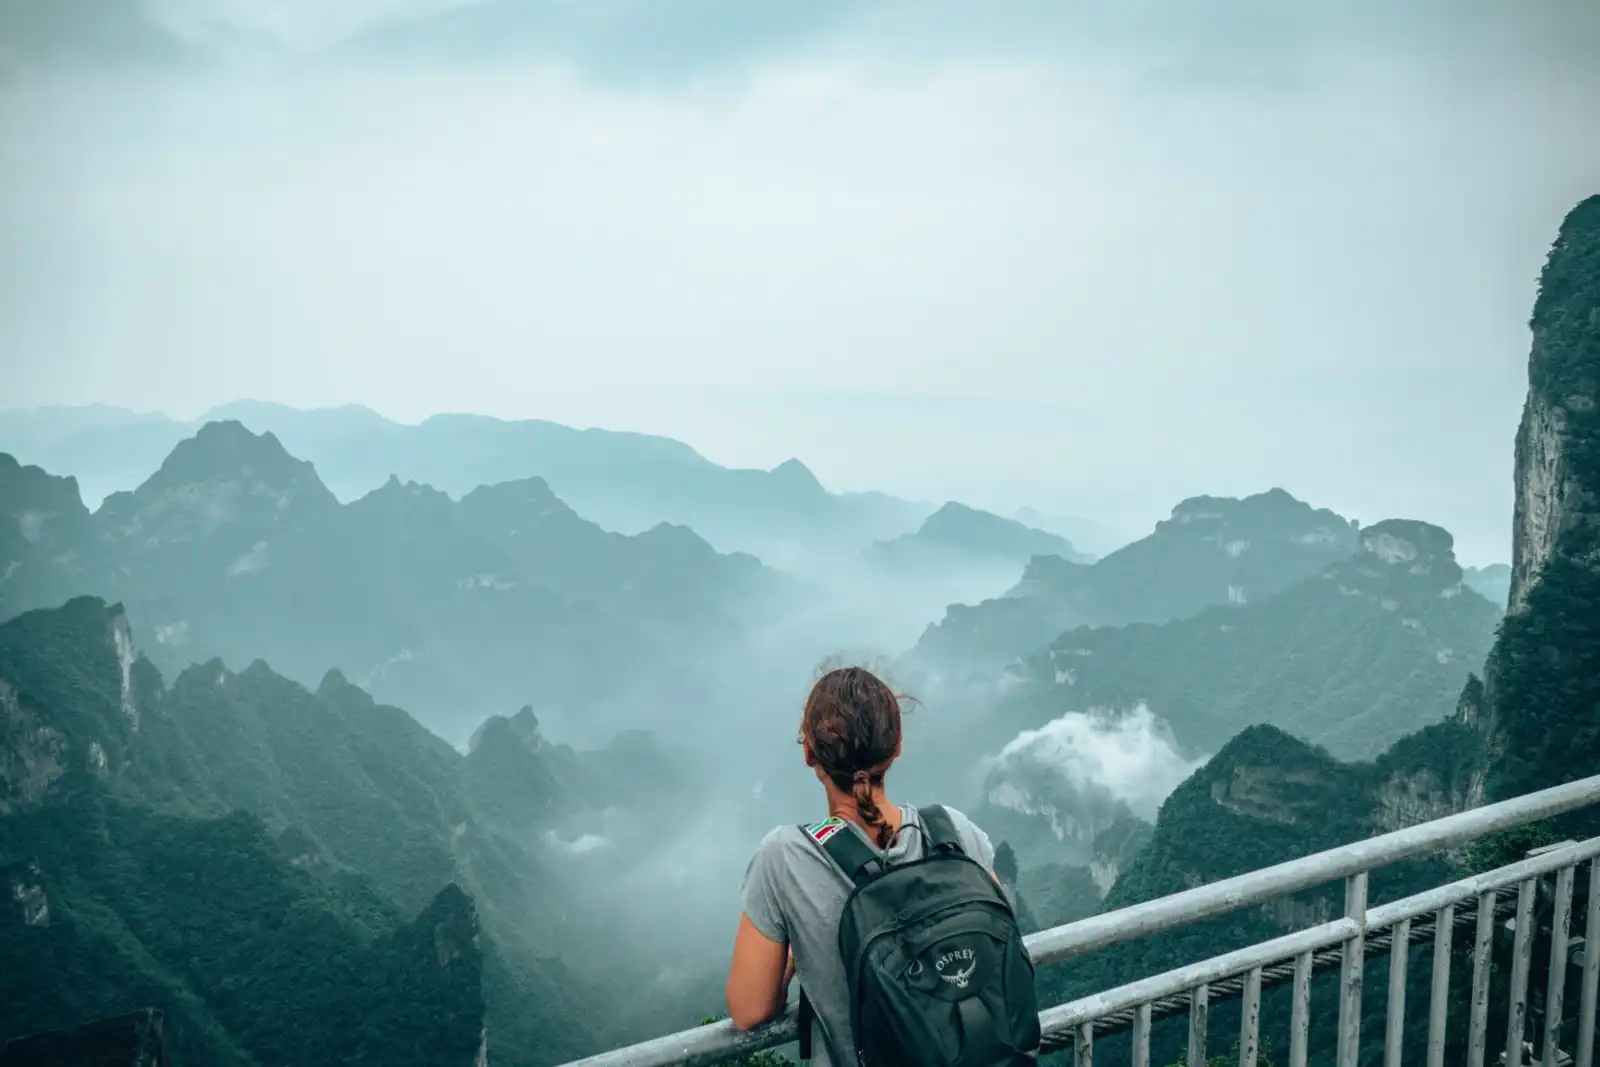 Hiking The Tianmen mountain lookout